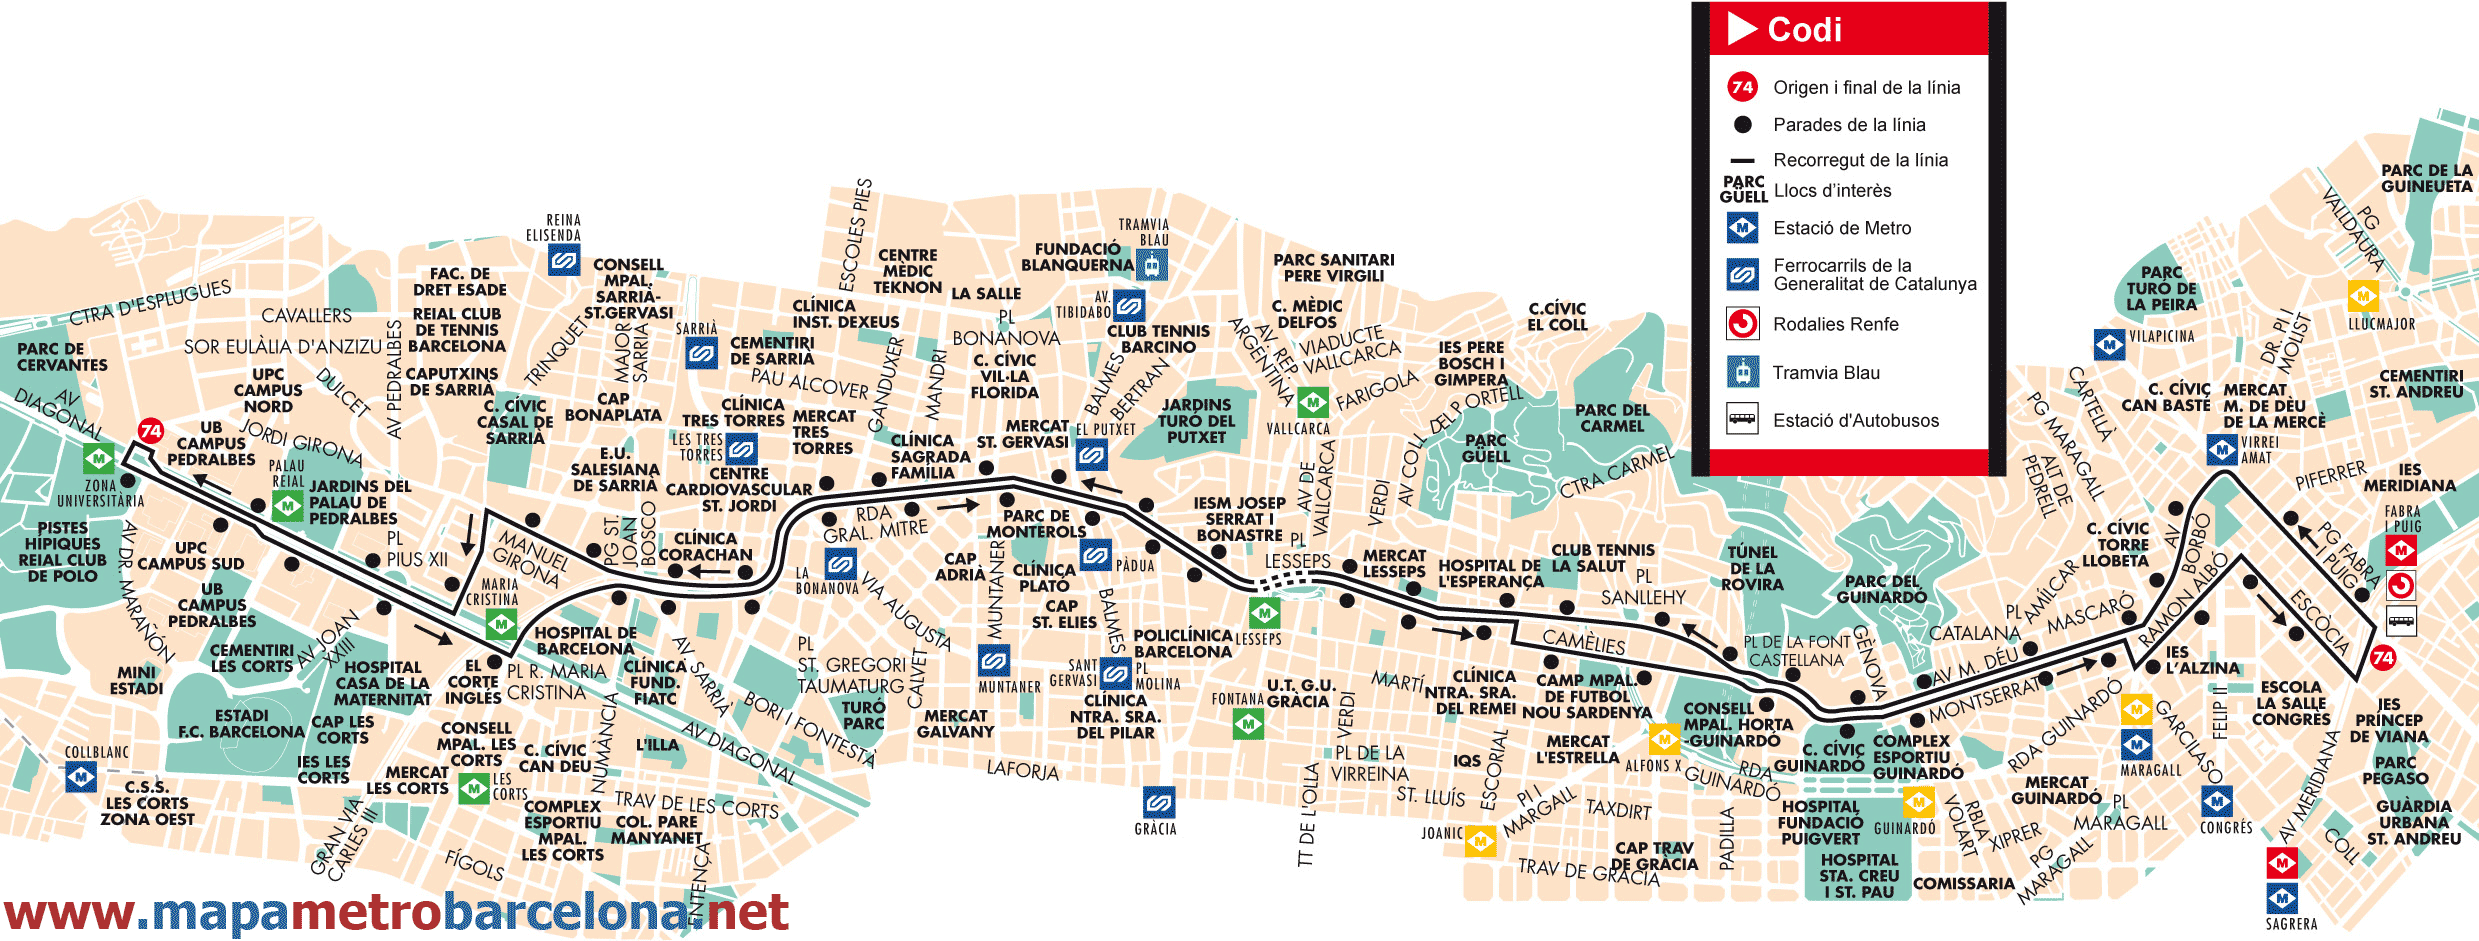 Mapa autobus barcelona línea 74